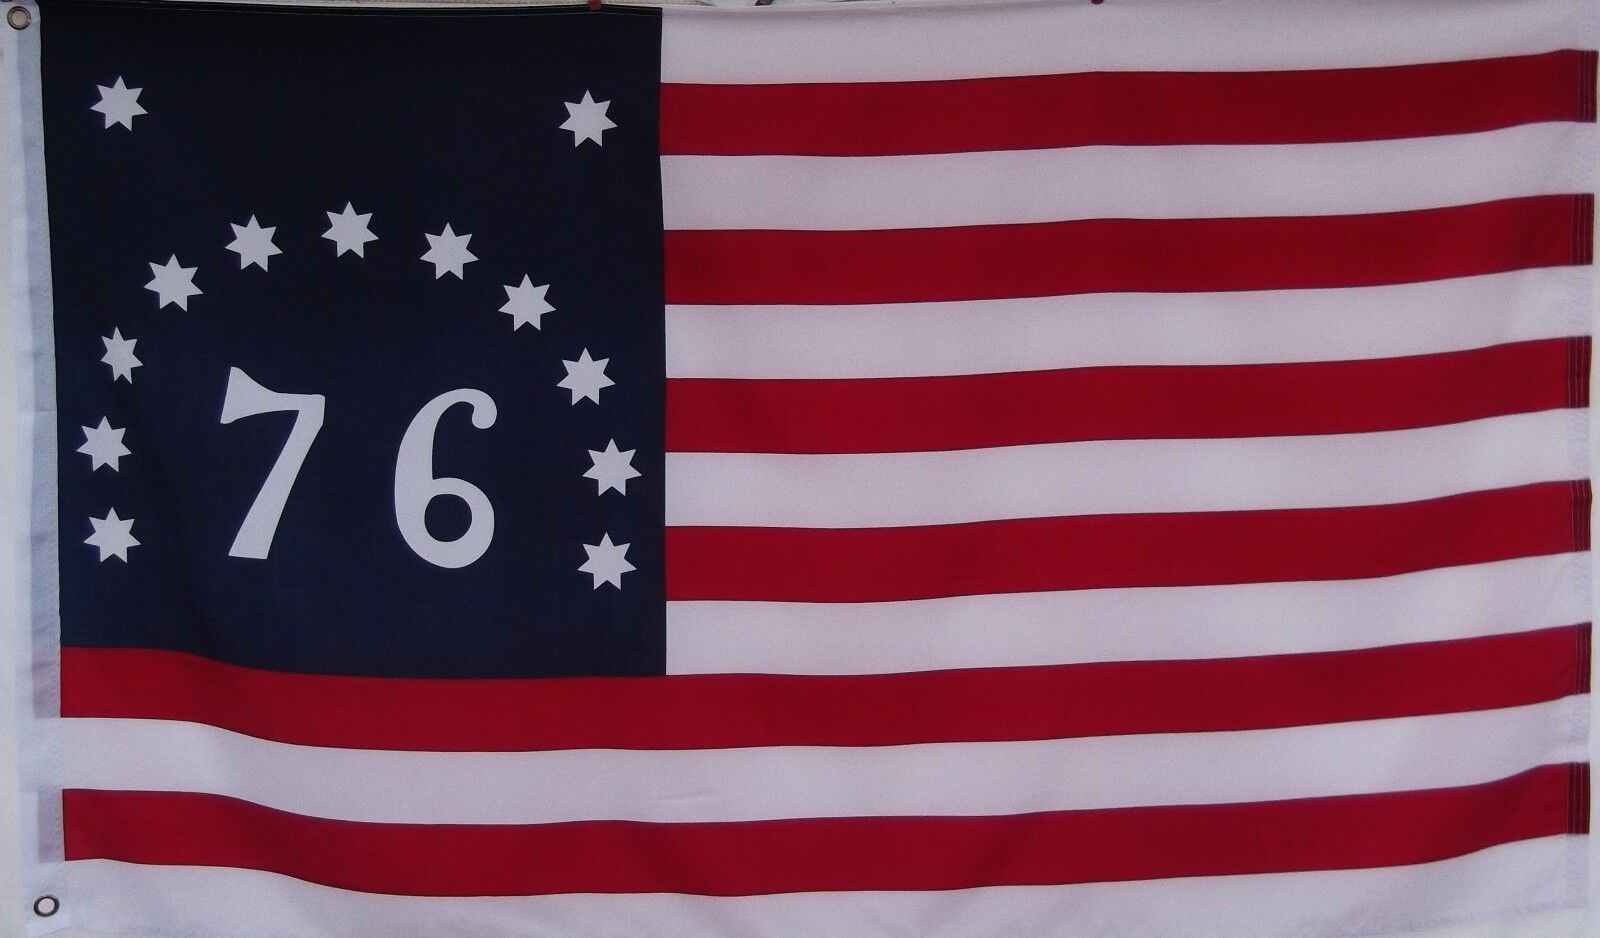 BENNINGTON 76 PATRIOTIC USA HISTORICAL FLAG - 1776 - AMERICAN REVOLUTION